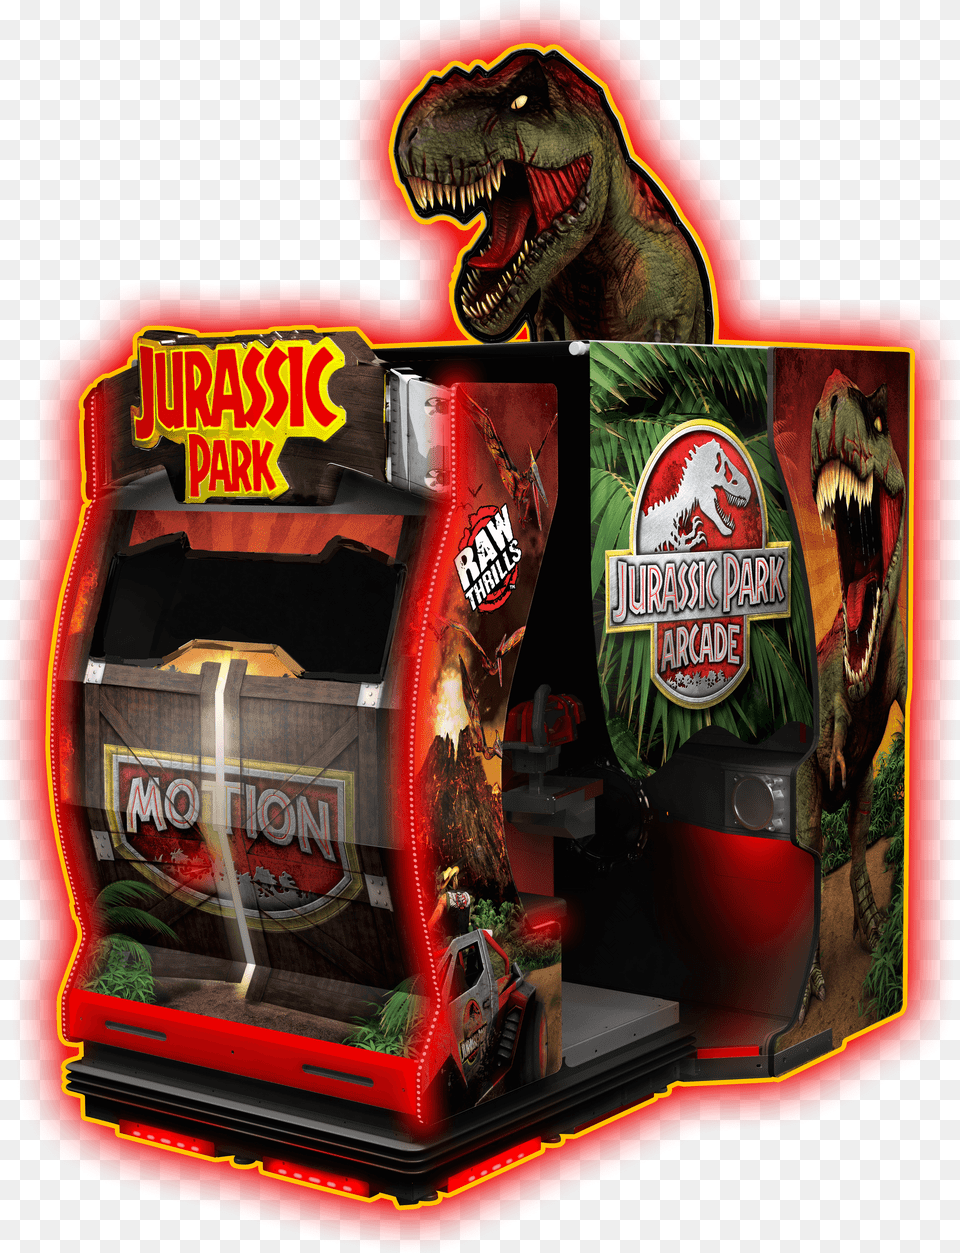 Jurassic Park Arcade Game Jurassic Park Arcade Game, Animal, Dinosaur, Reptile Free Png Download